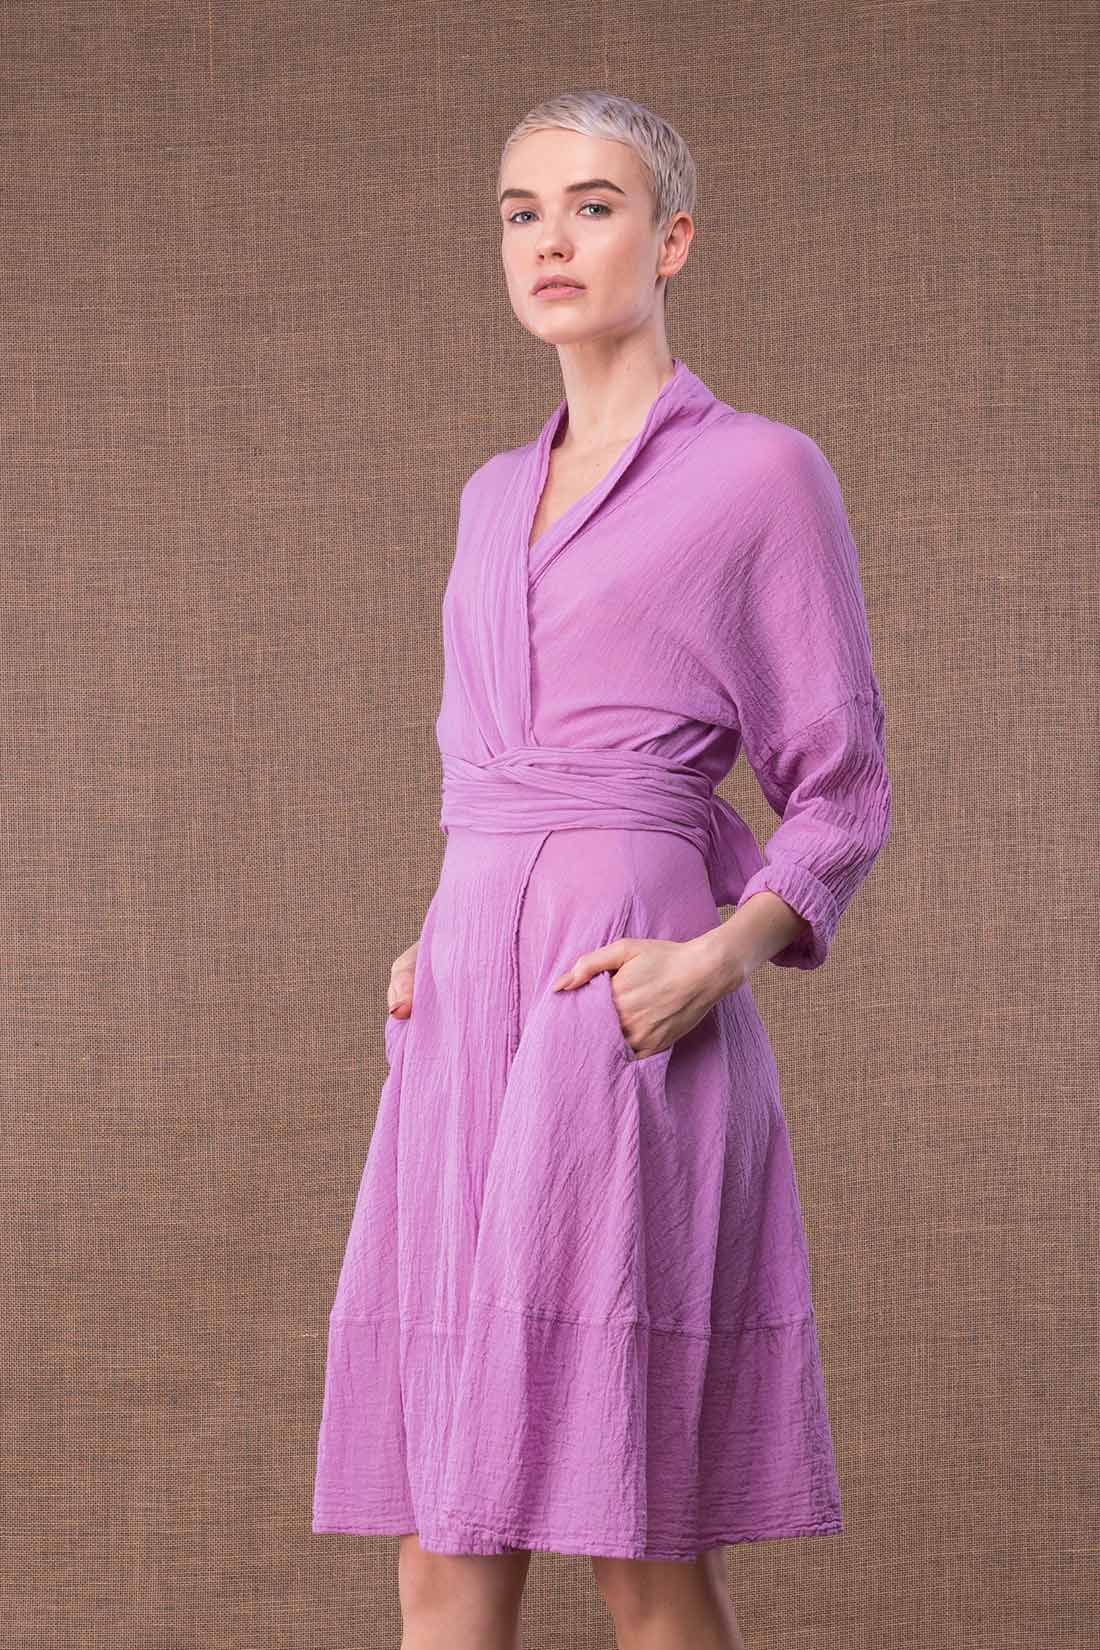 purple collared dress